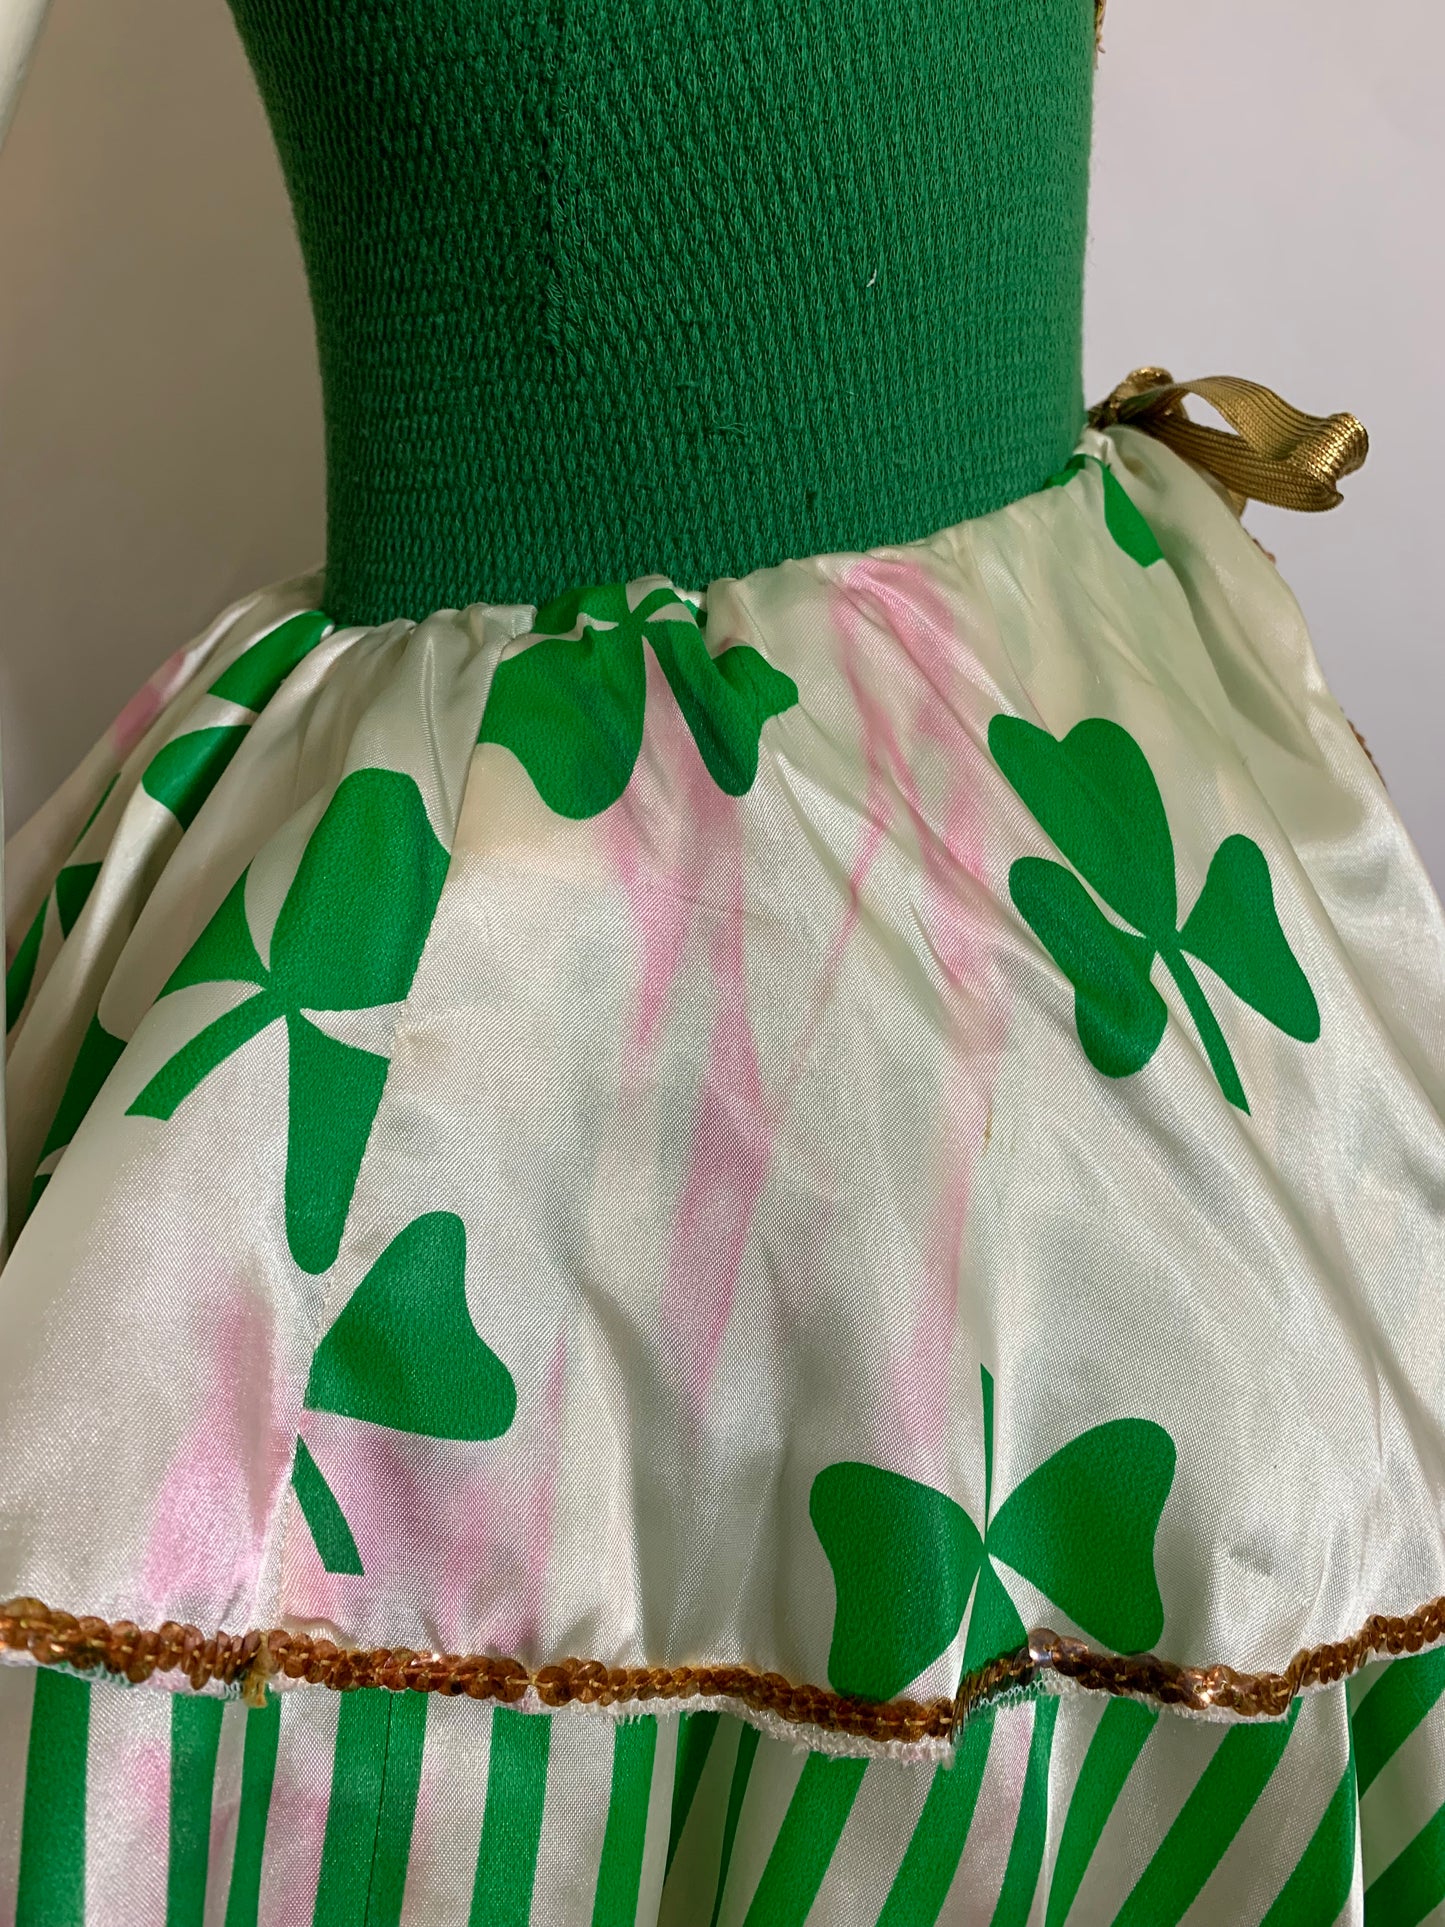 Cheeky Shamrock Printed Irish Themed Stage Costume Leotard Dress circa 1960s